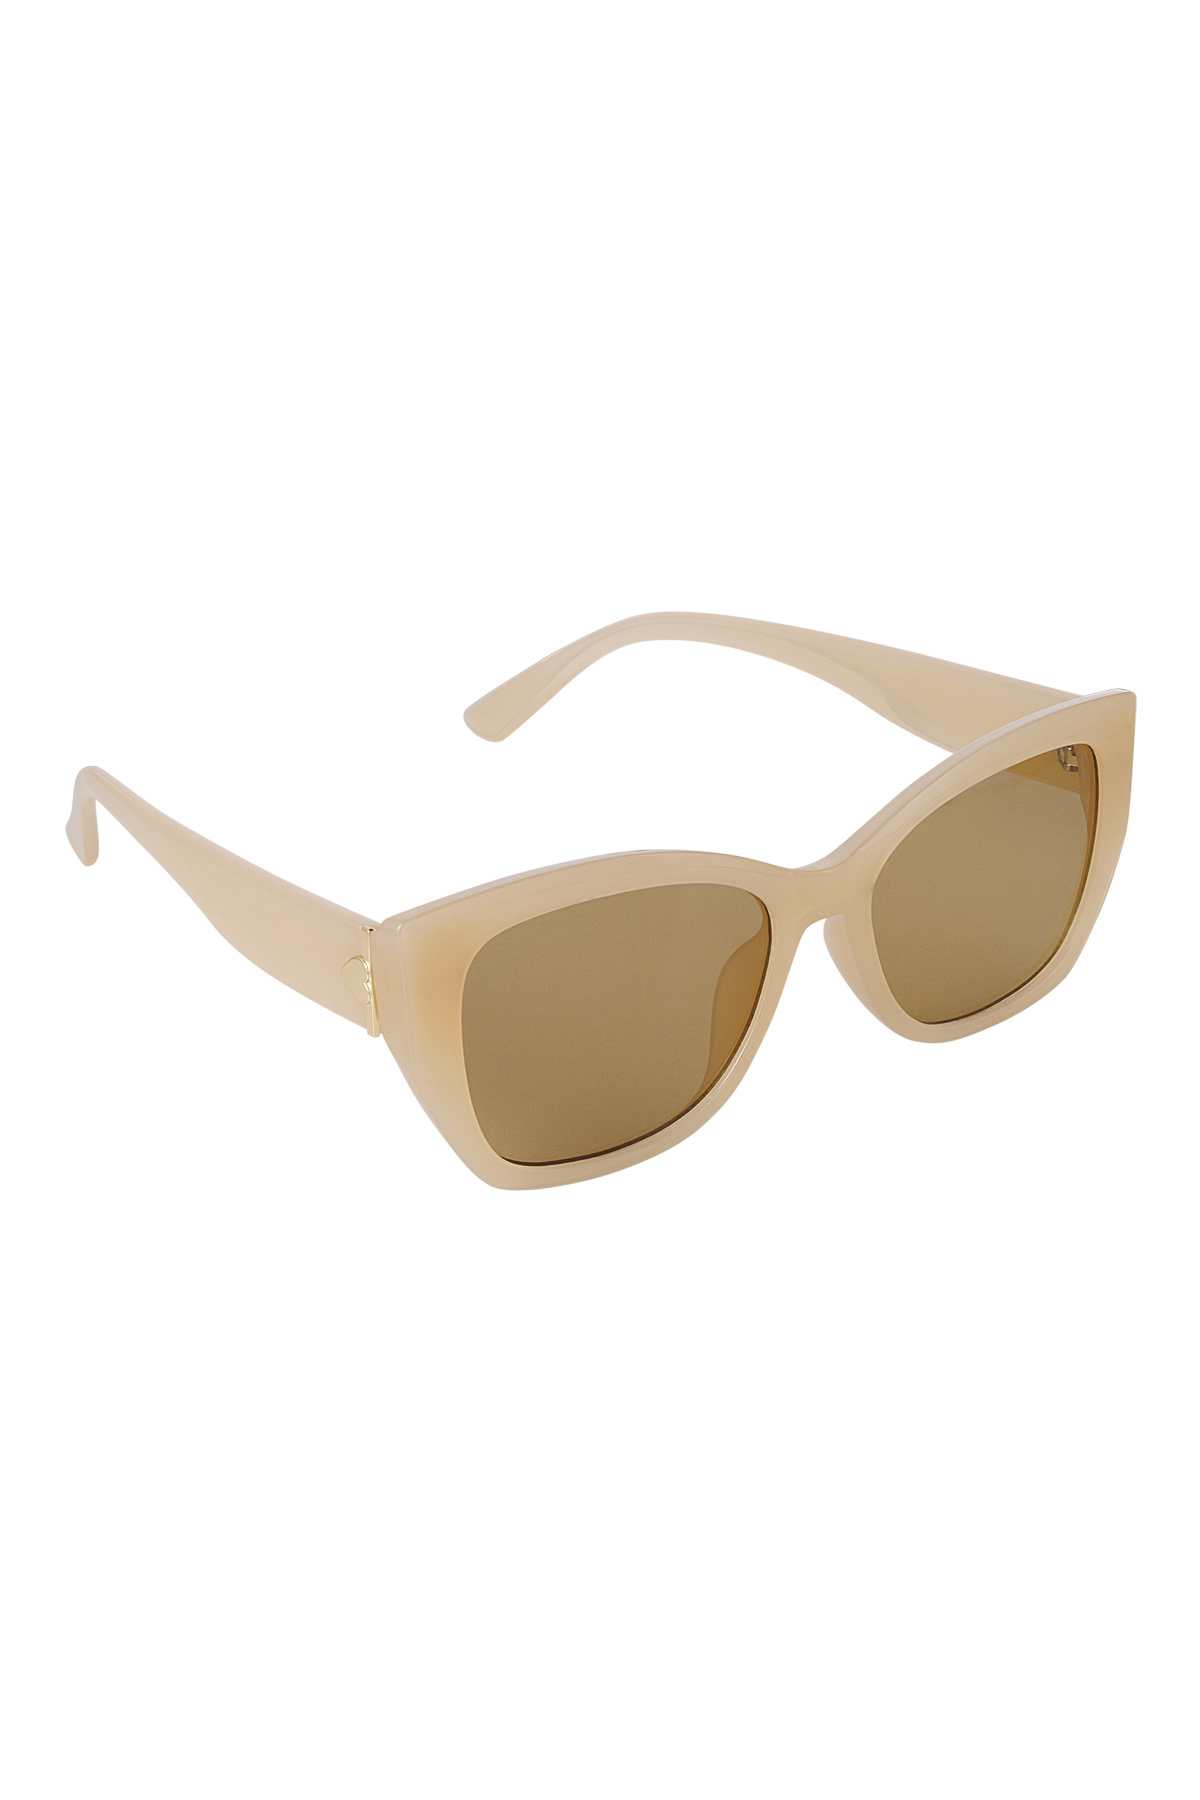 Basic-Sonnenbrille - beige PC One size